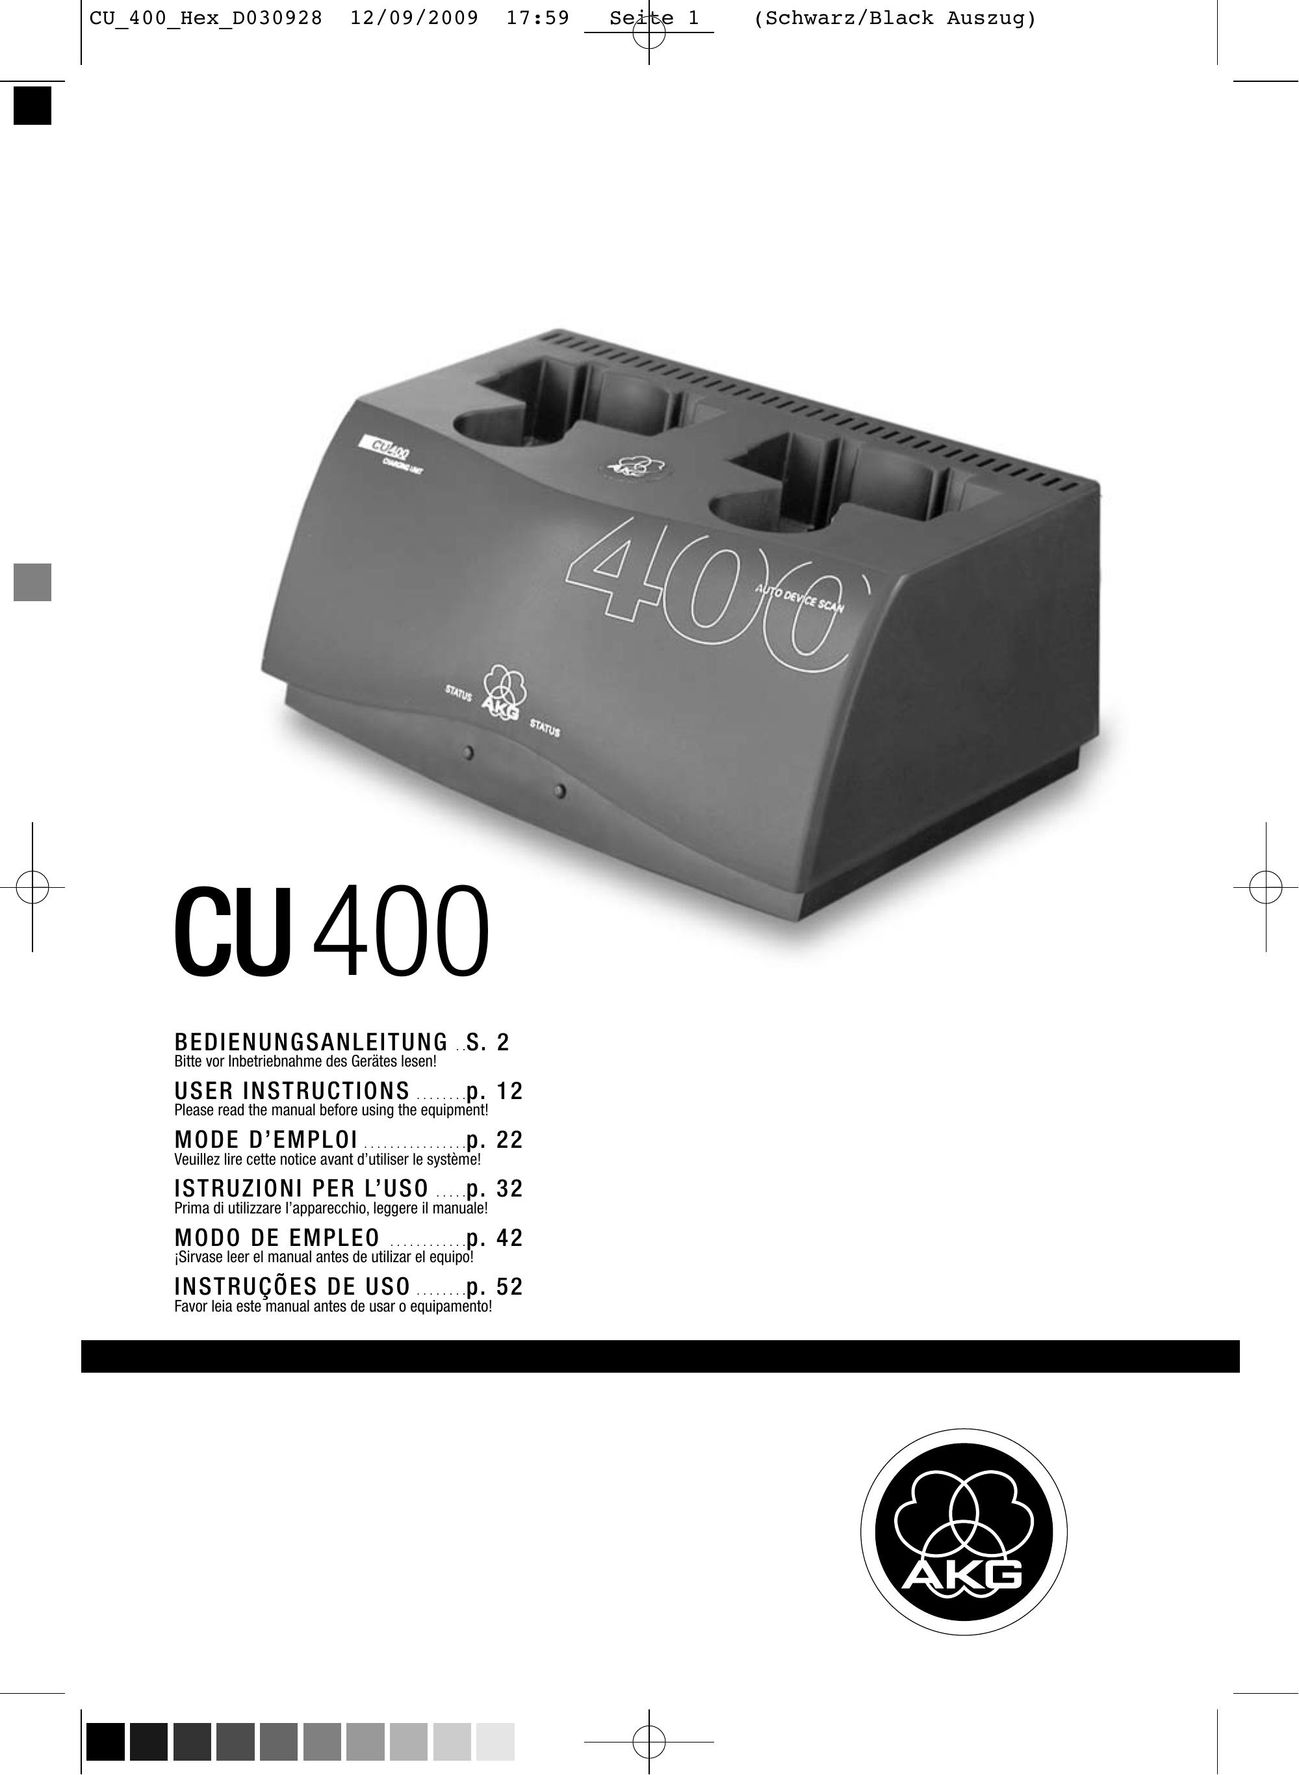 AKG Acoustics CU400 Battery Charger User Manual